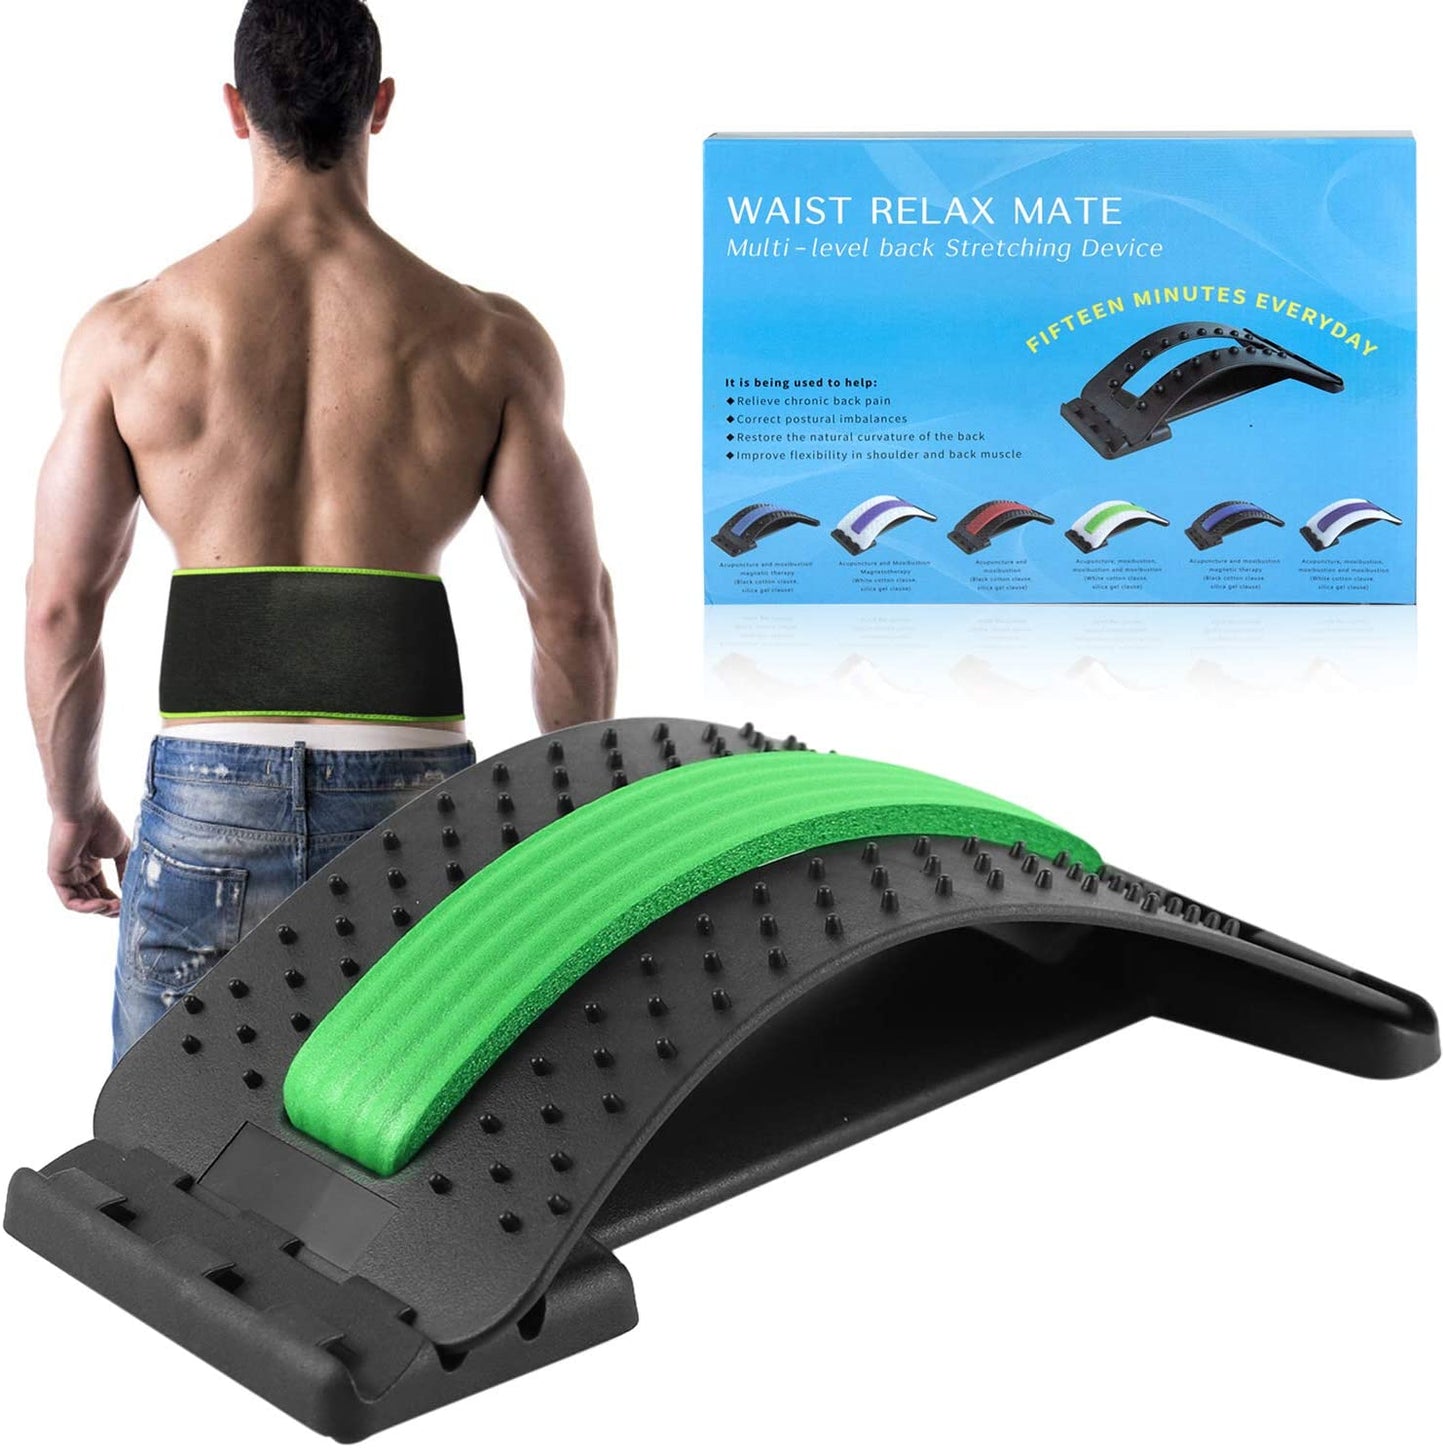 Back Stretcher, Lumbar Relief Back Stretcher Device, Multi-level